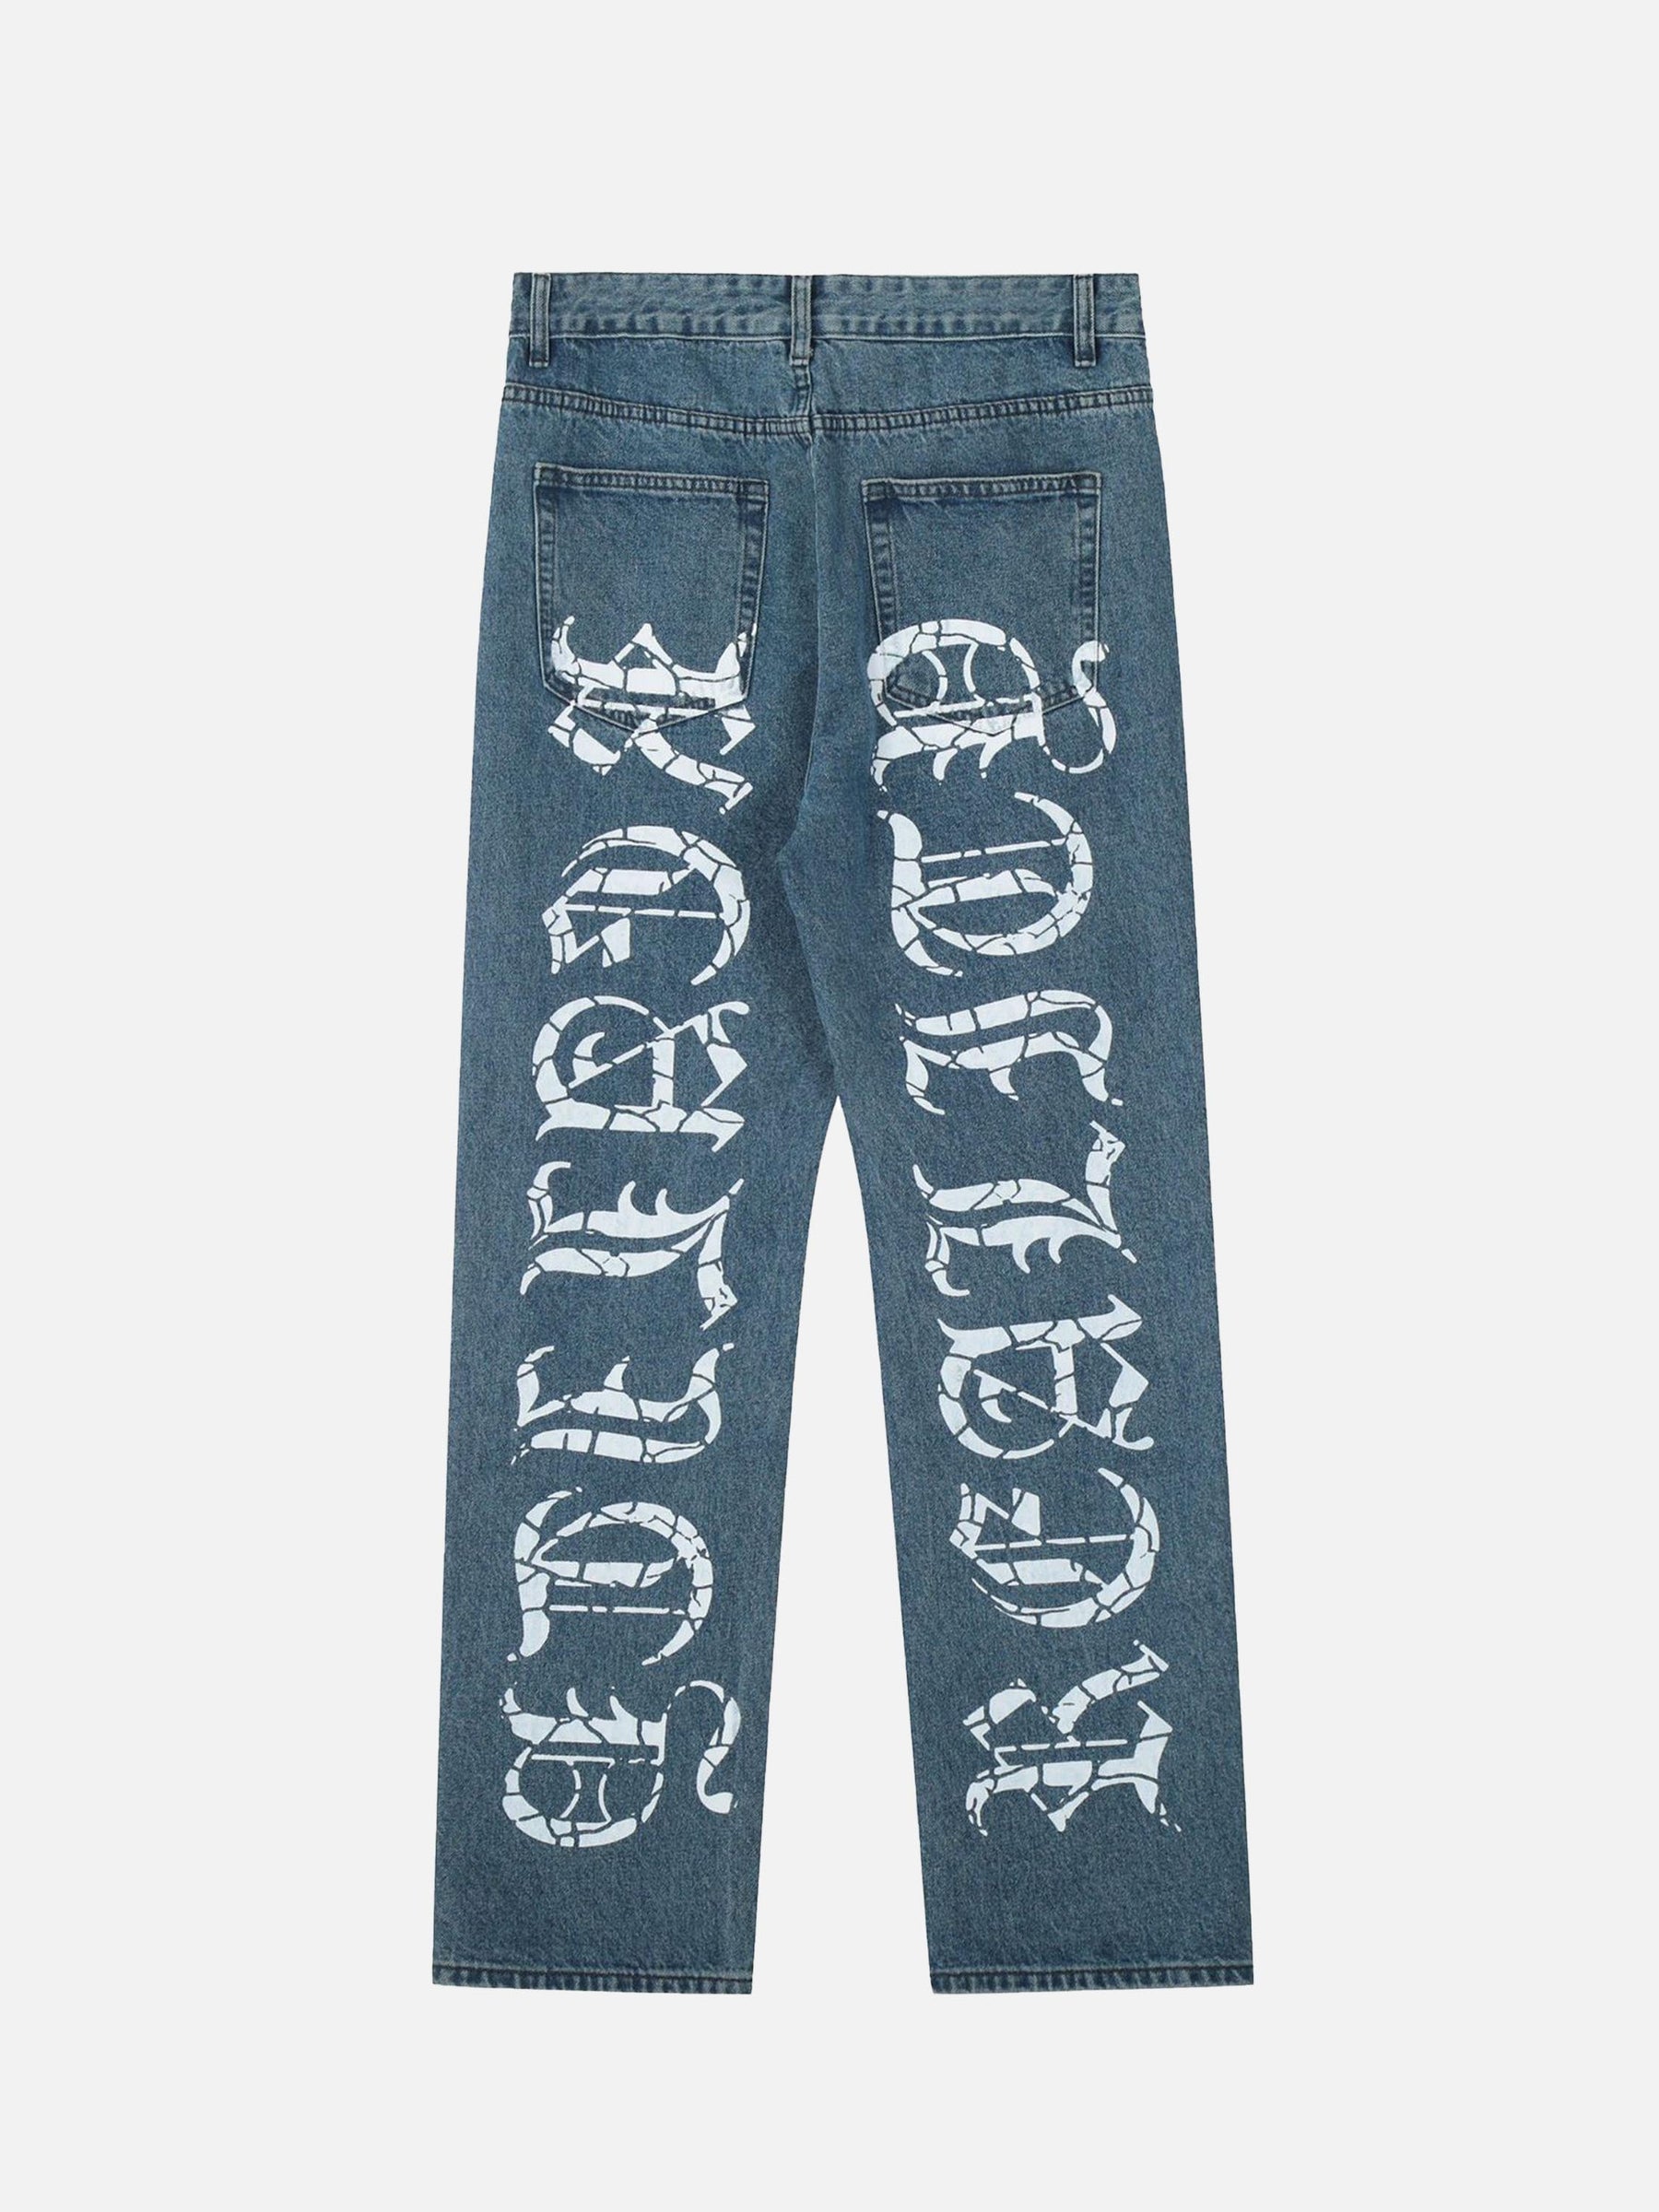 LUXENFY™ - Hip Hop High Street Straight Jeans luxenfy.com